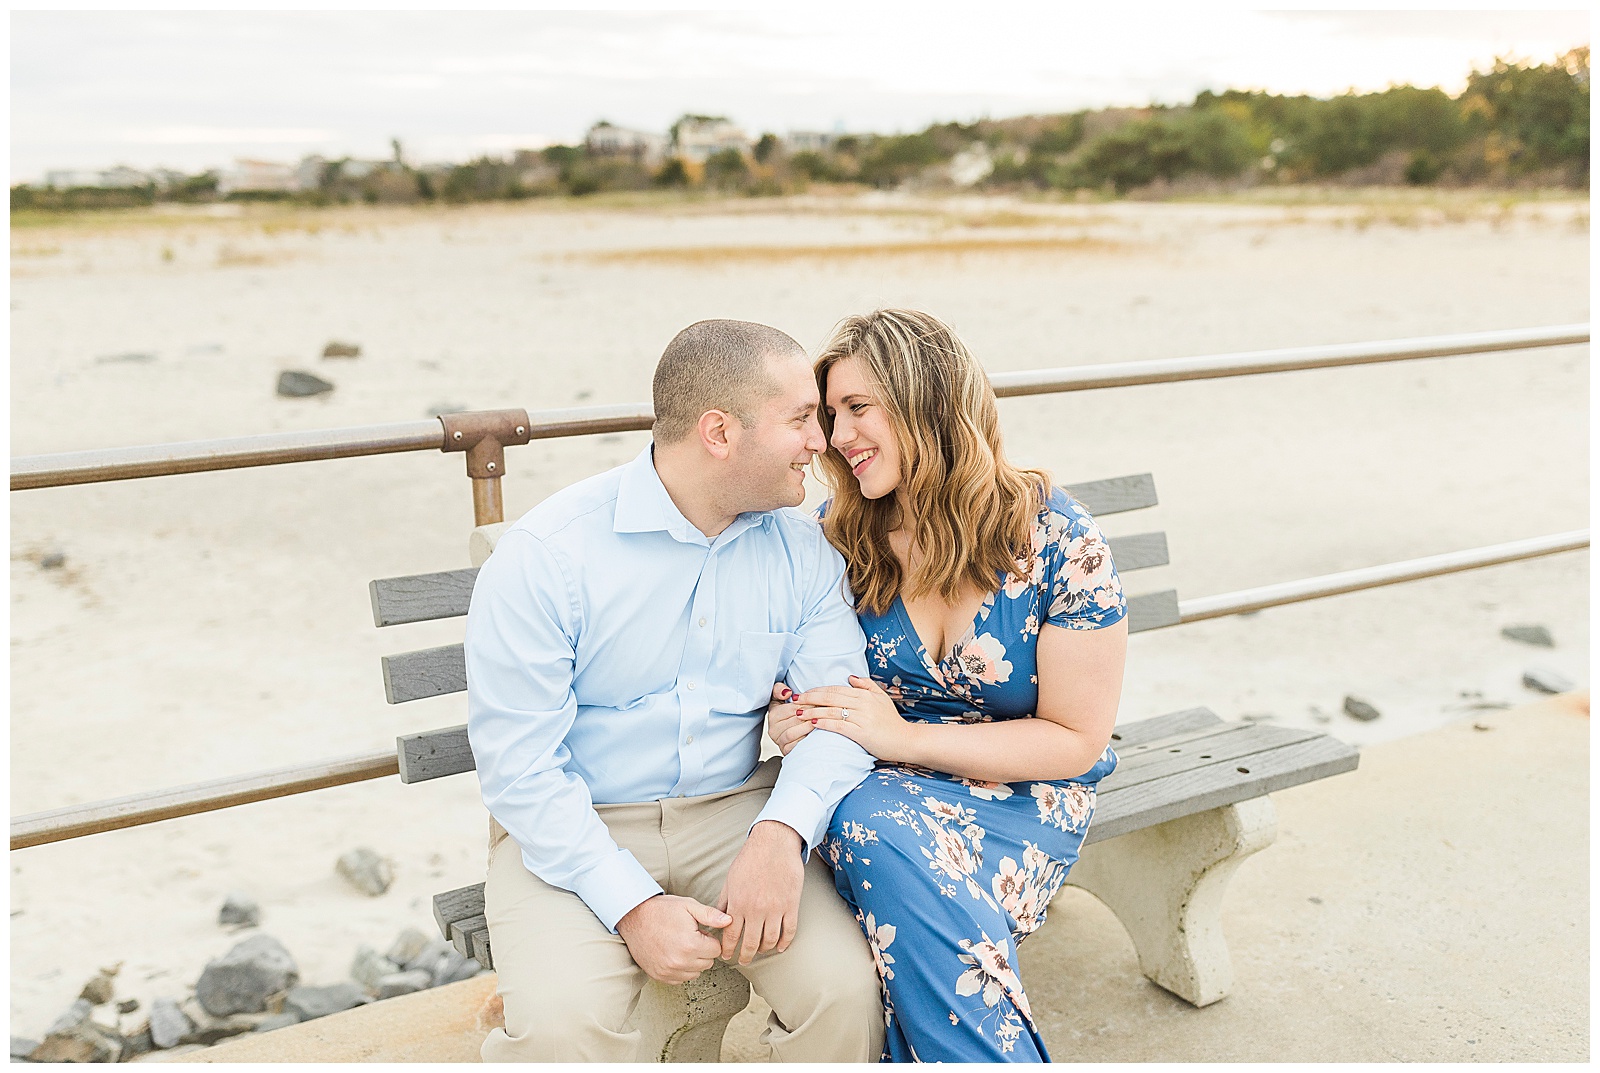 Engagement Pics on Long Beach Island